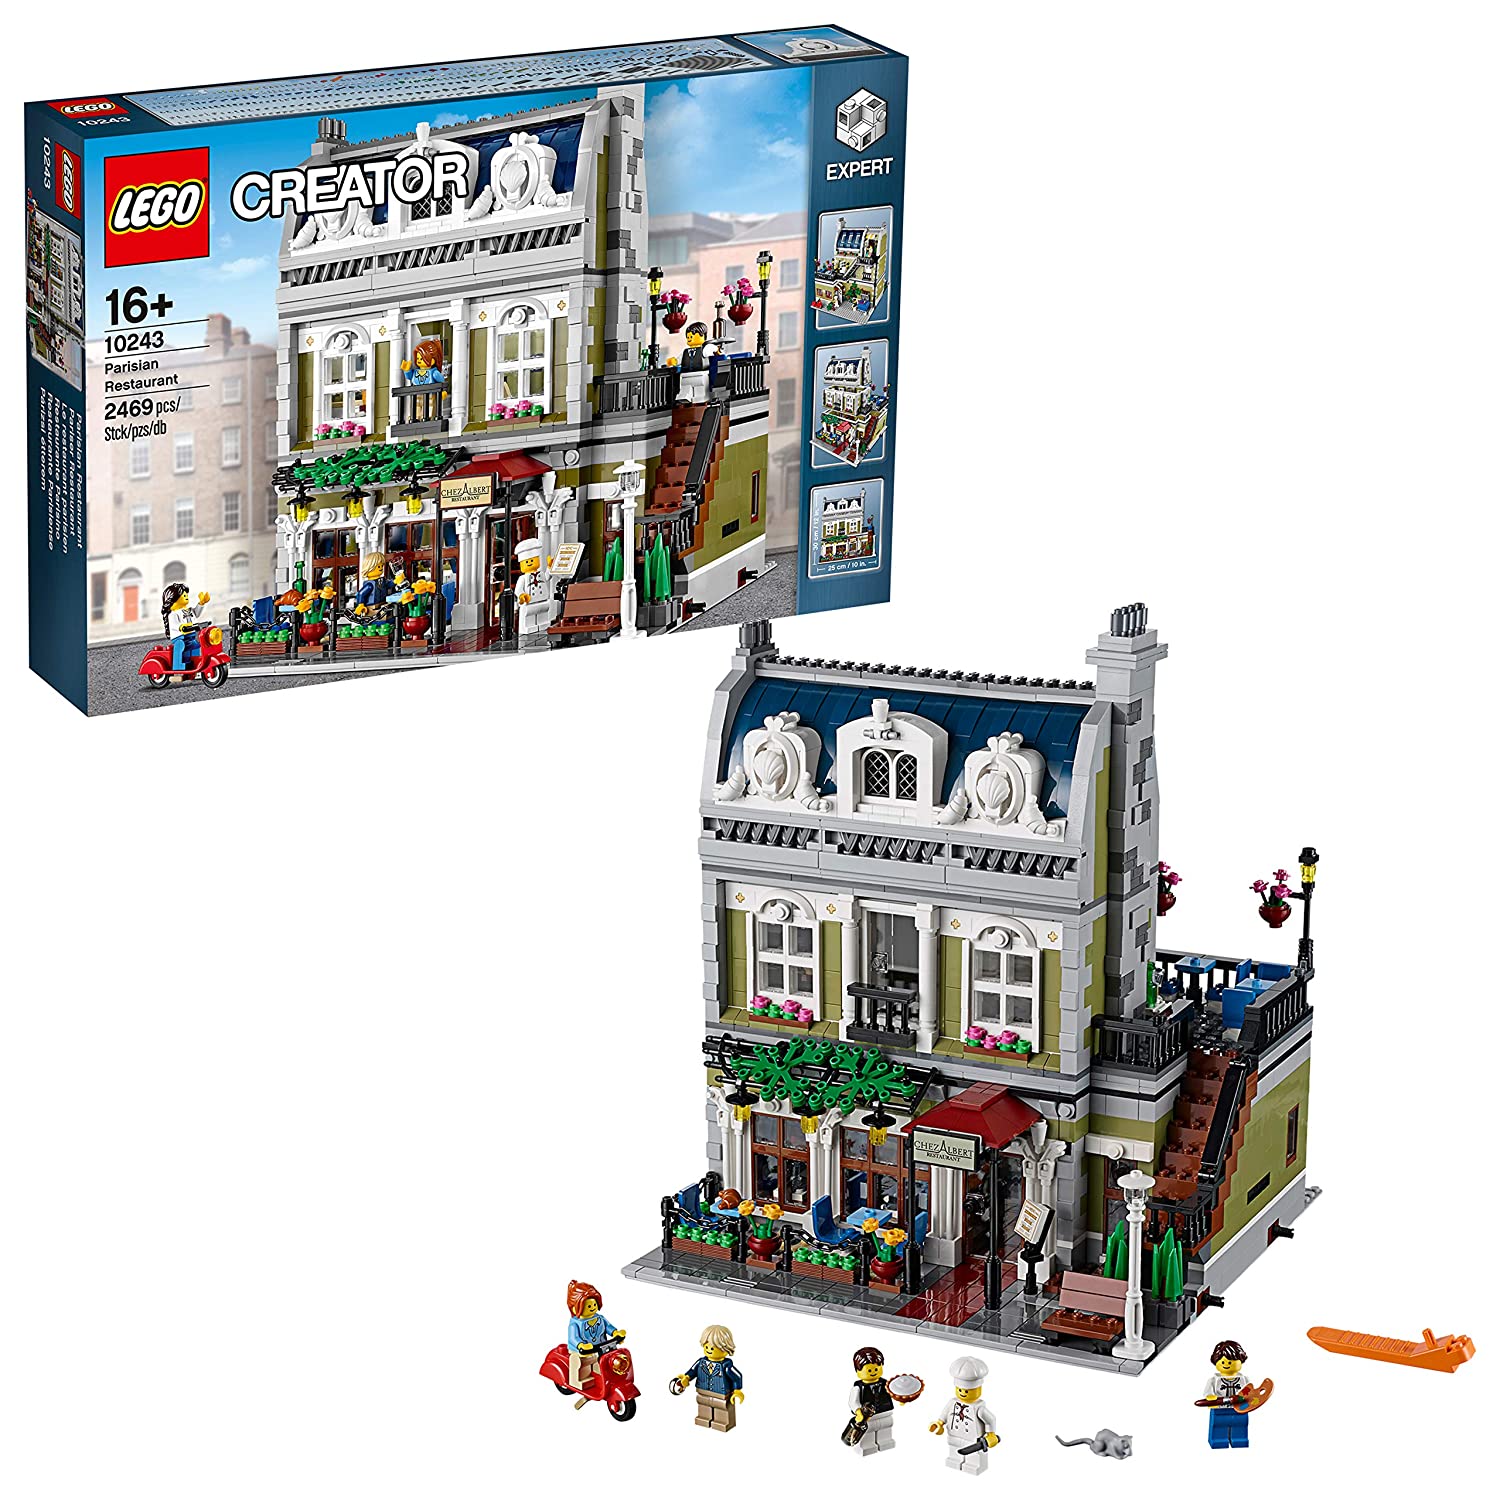 9 Best LEGO Modular Buildings Set 2023 - Buying Guide 9